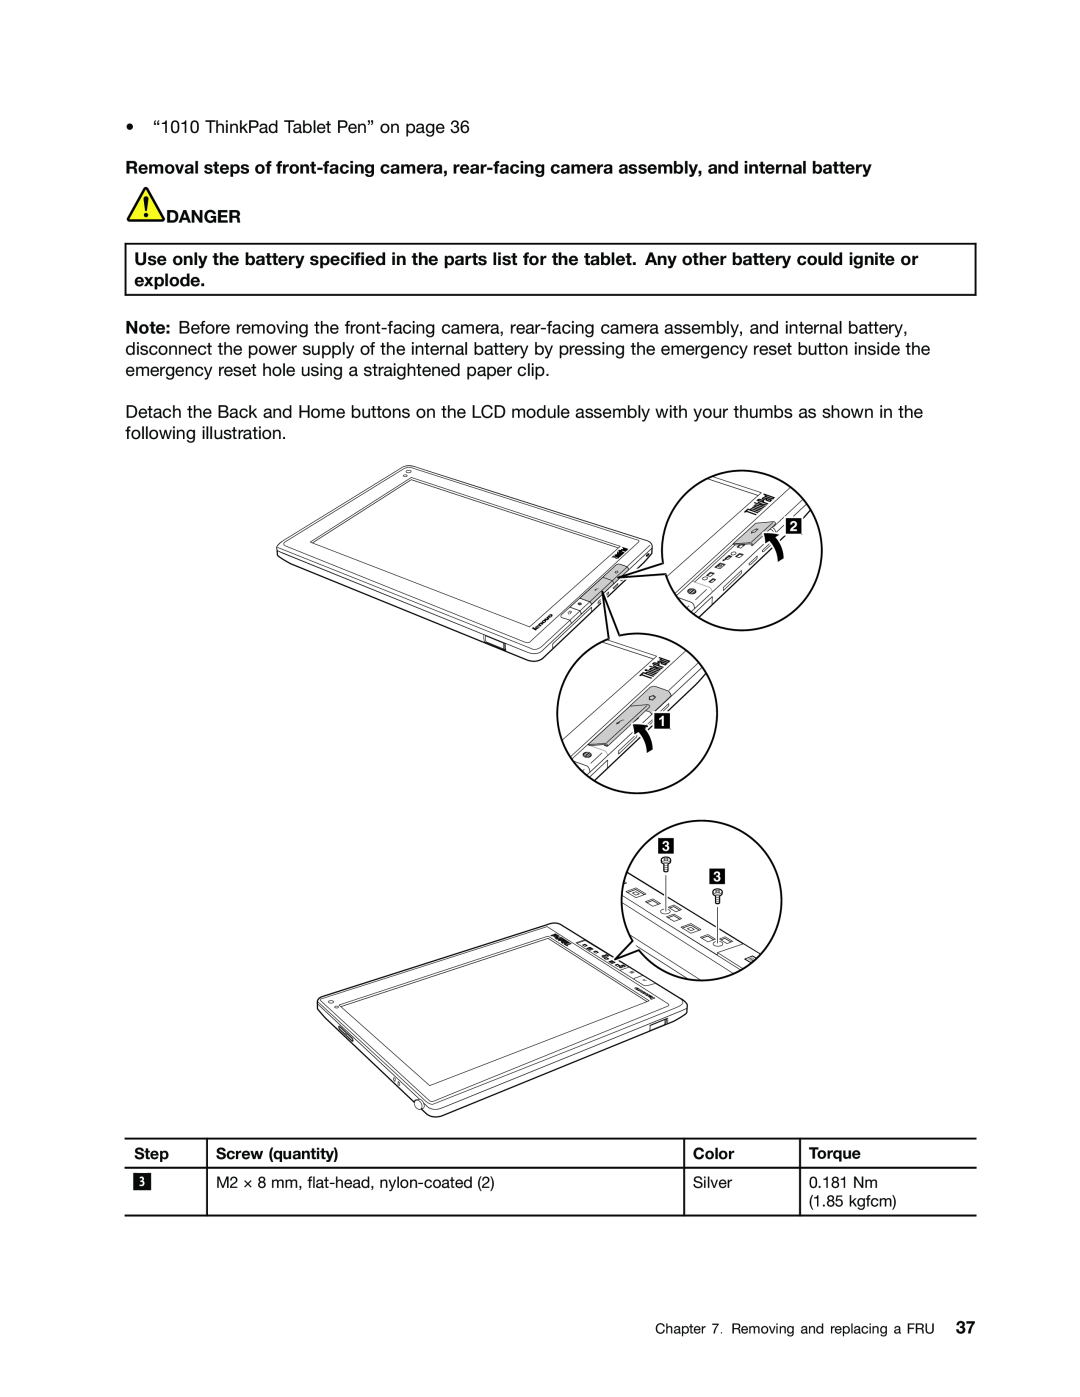 Lenovo 183822U, 183825U manual “1010 ThinkPad Tablet Pen” on page, Danger 